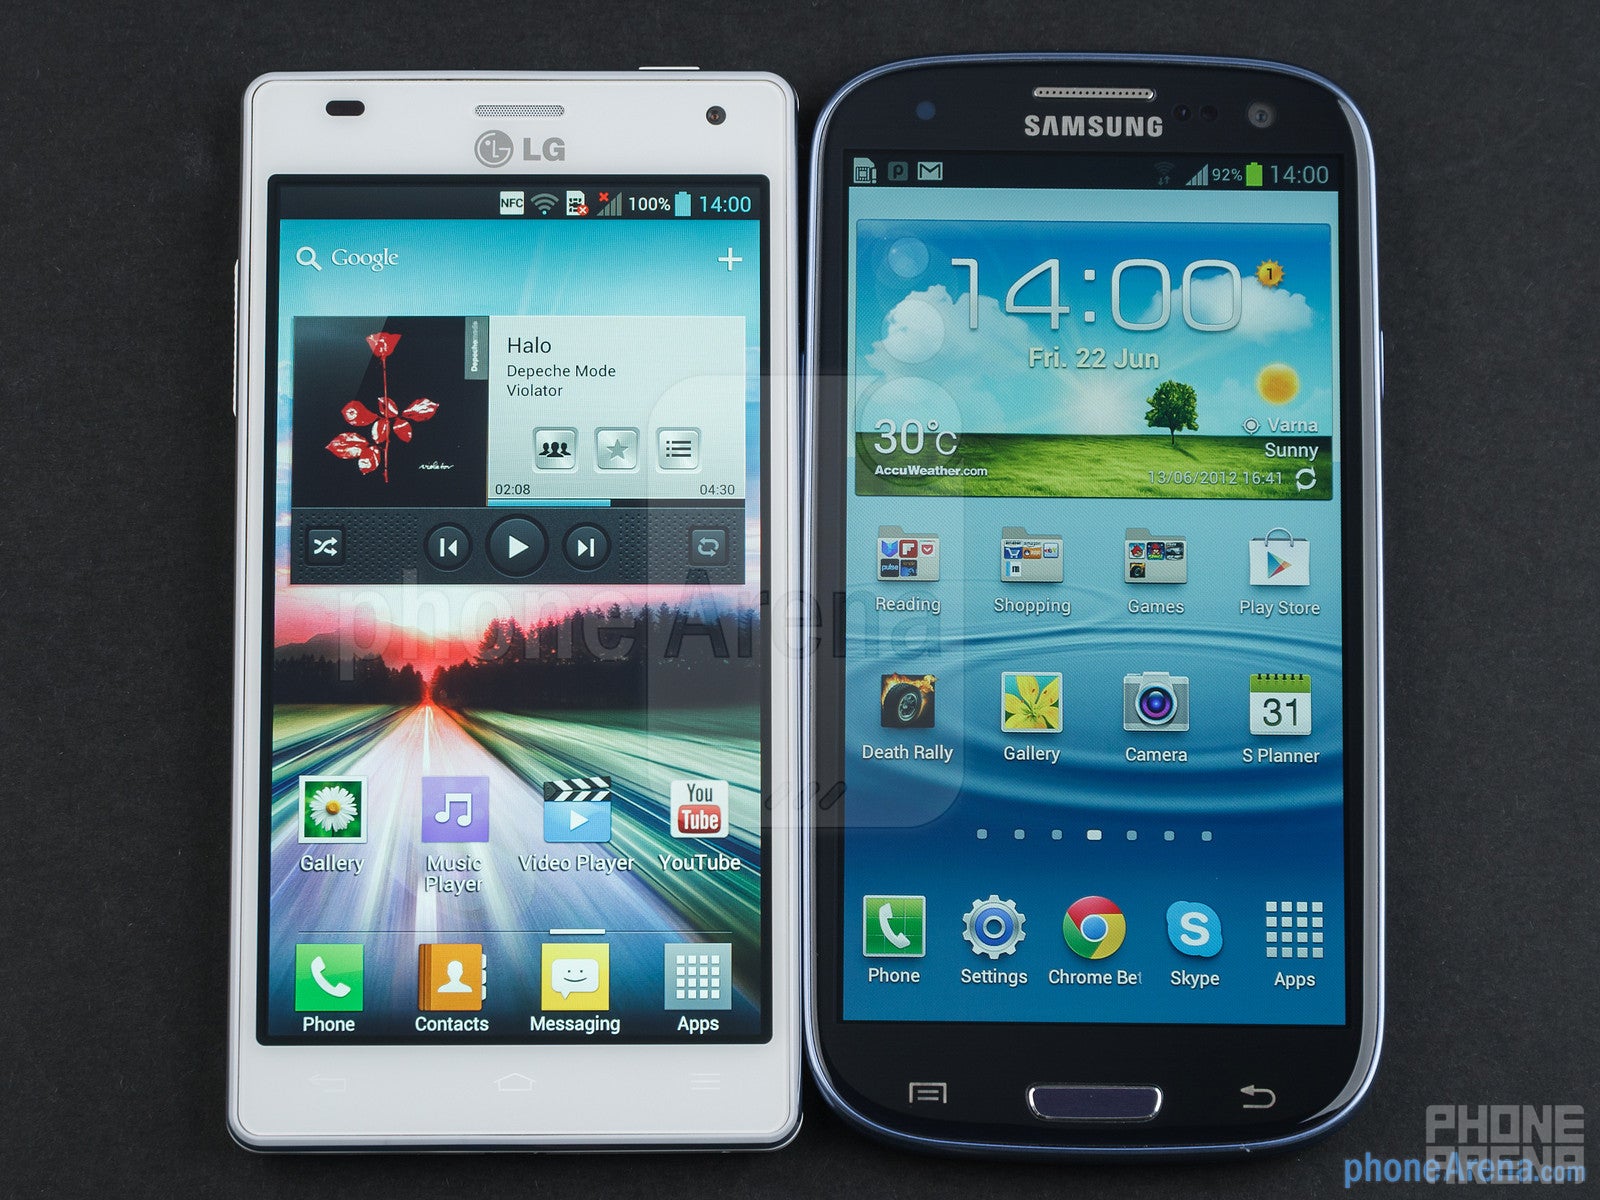 The Samsung Galaxy S III sports a slightly bigger display - LG Optimus 4X HD vs Samsung Galaxy S III